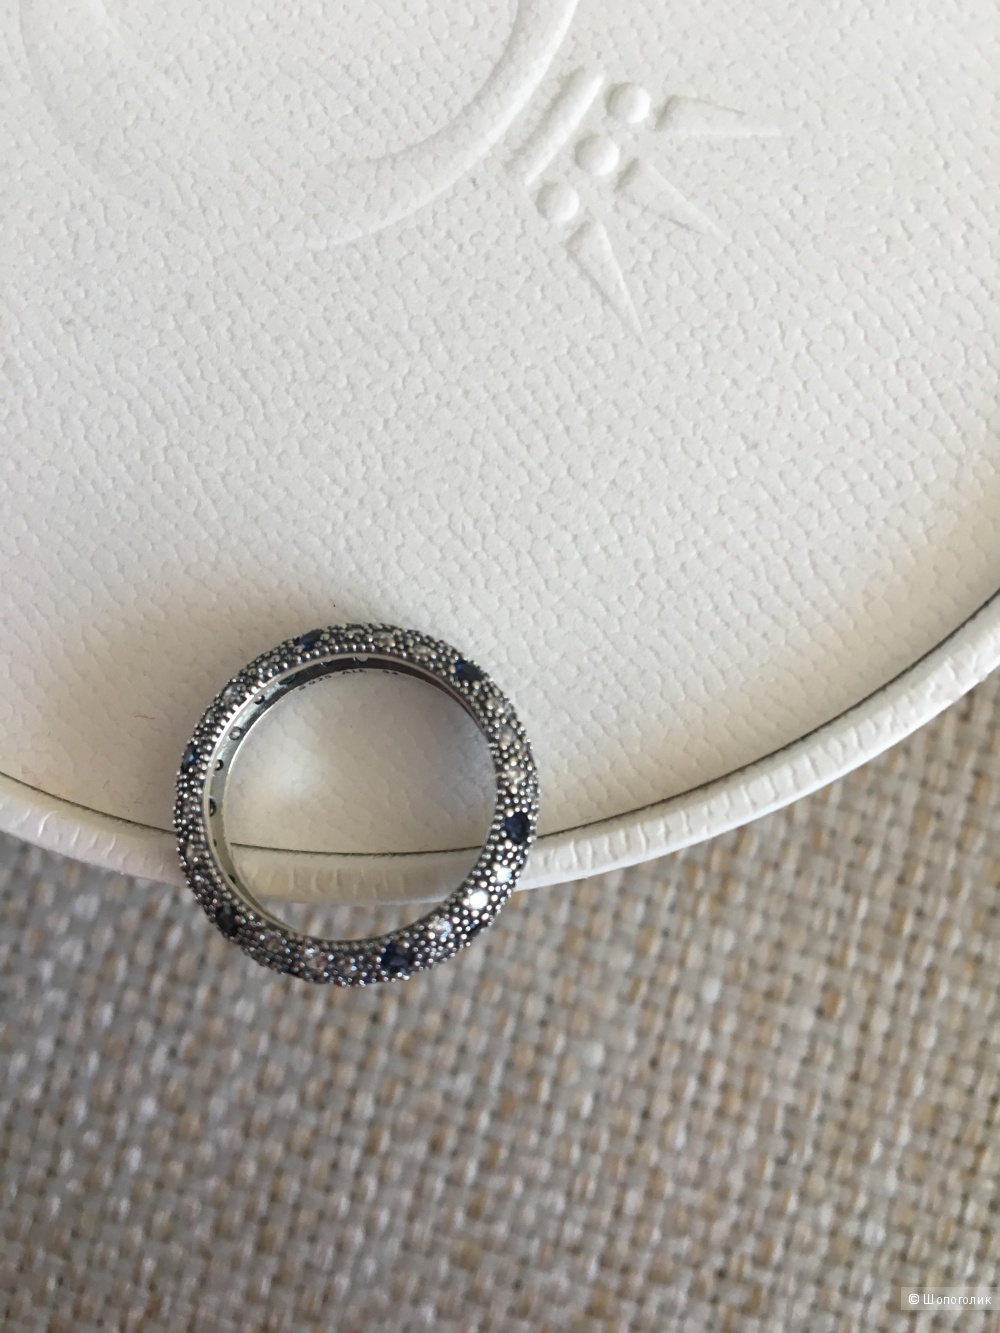 Кольцо Pandora, 54 размер